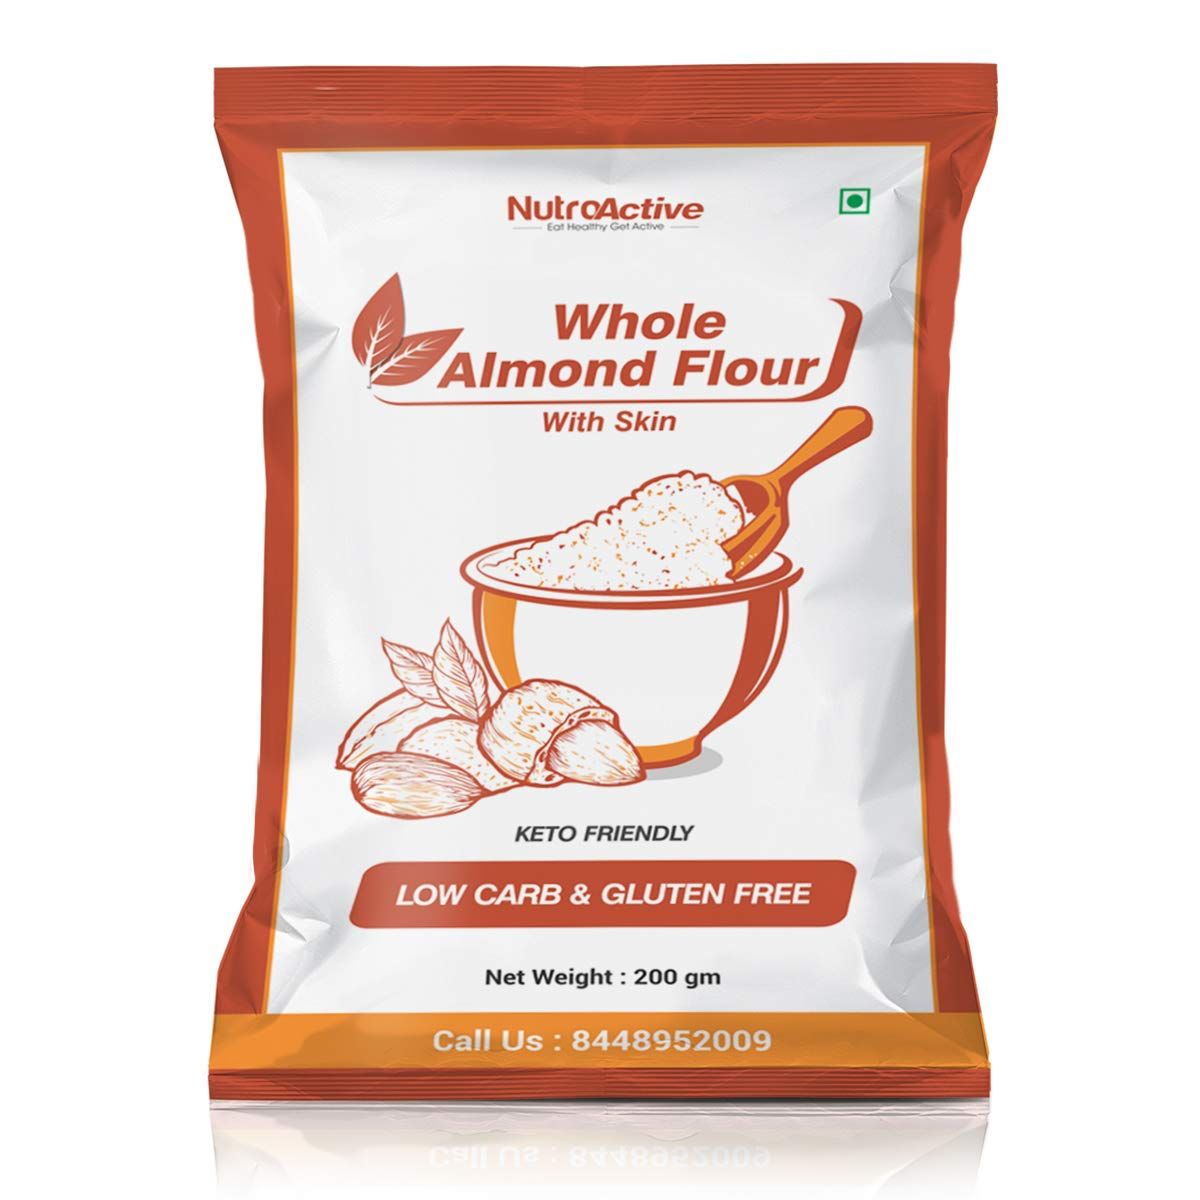 Nutroactive Whole Almond Flour Image